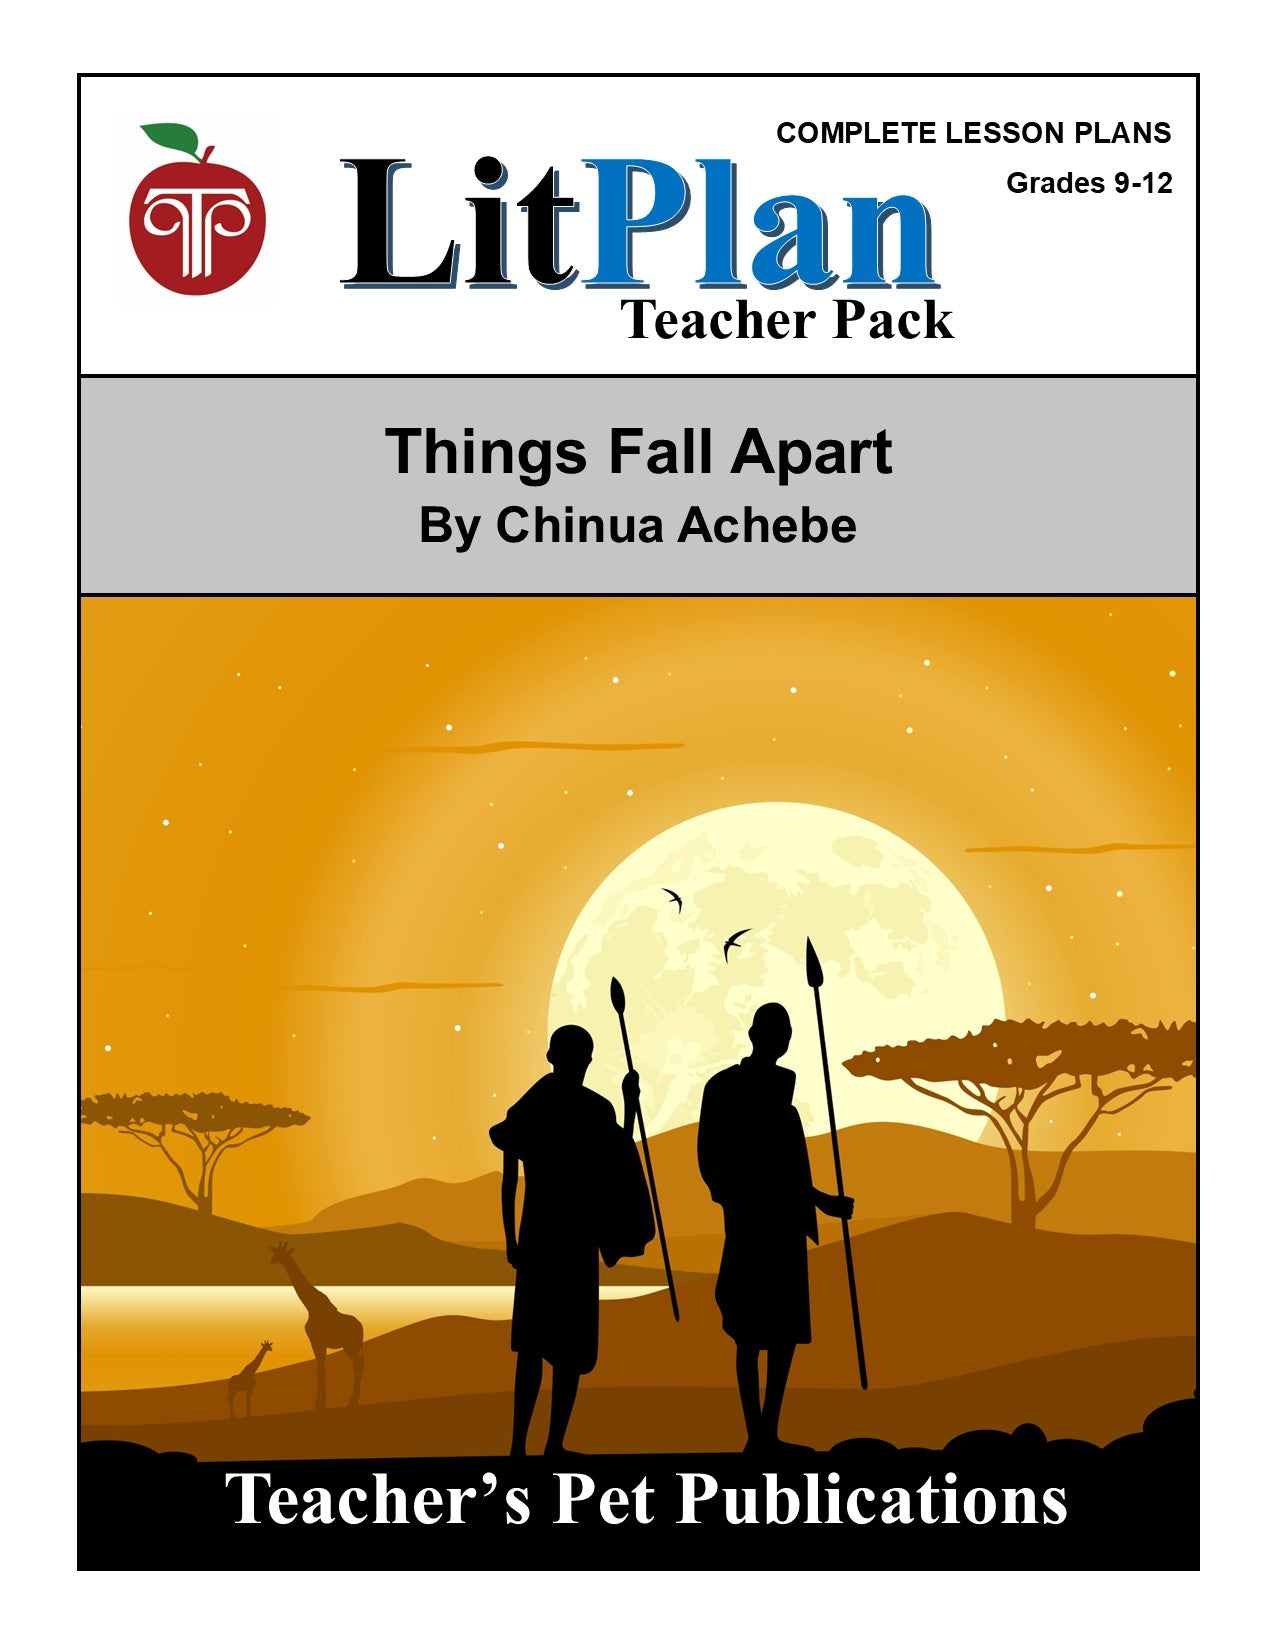 Things Fall Apart: LitPlan Teacher Pack Grades 9-12